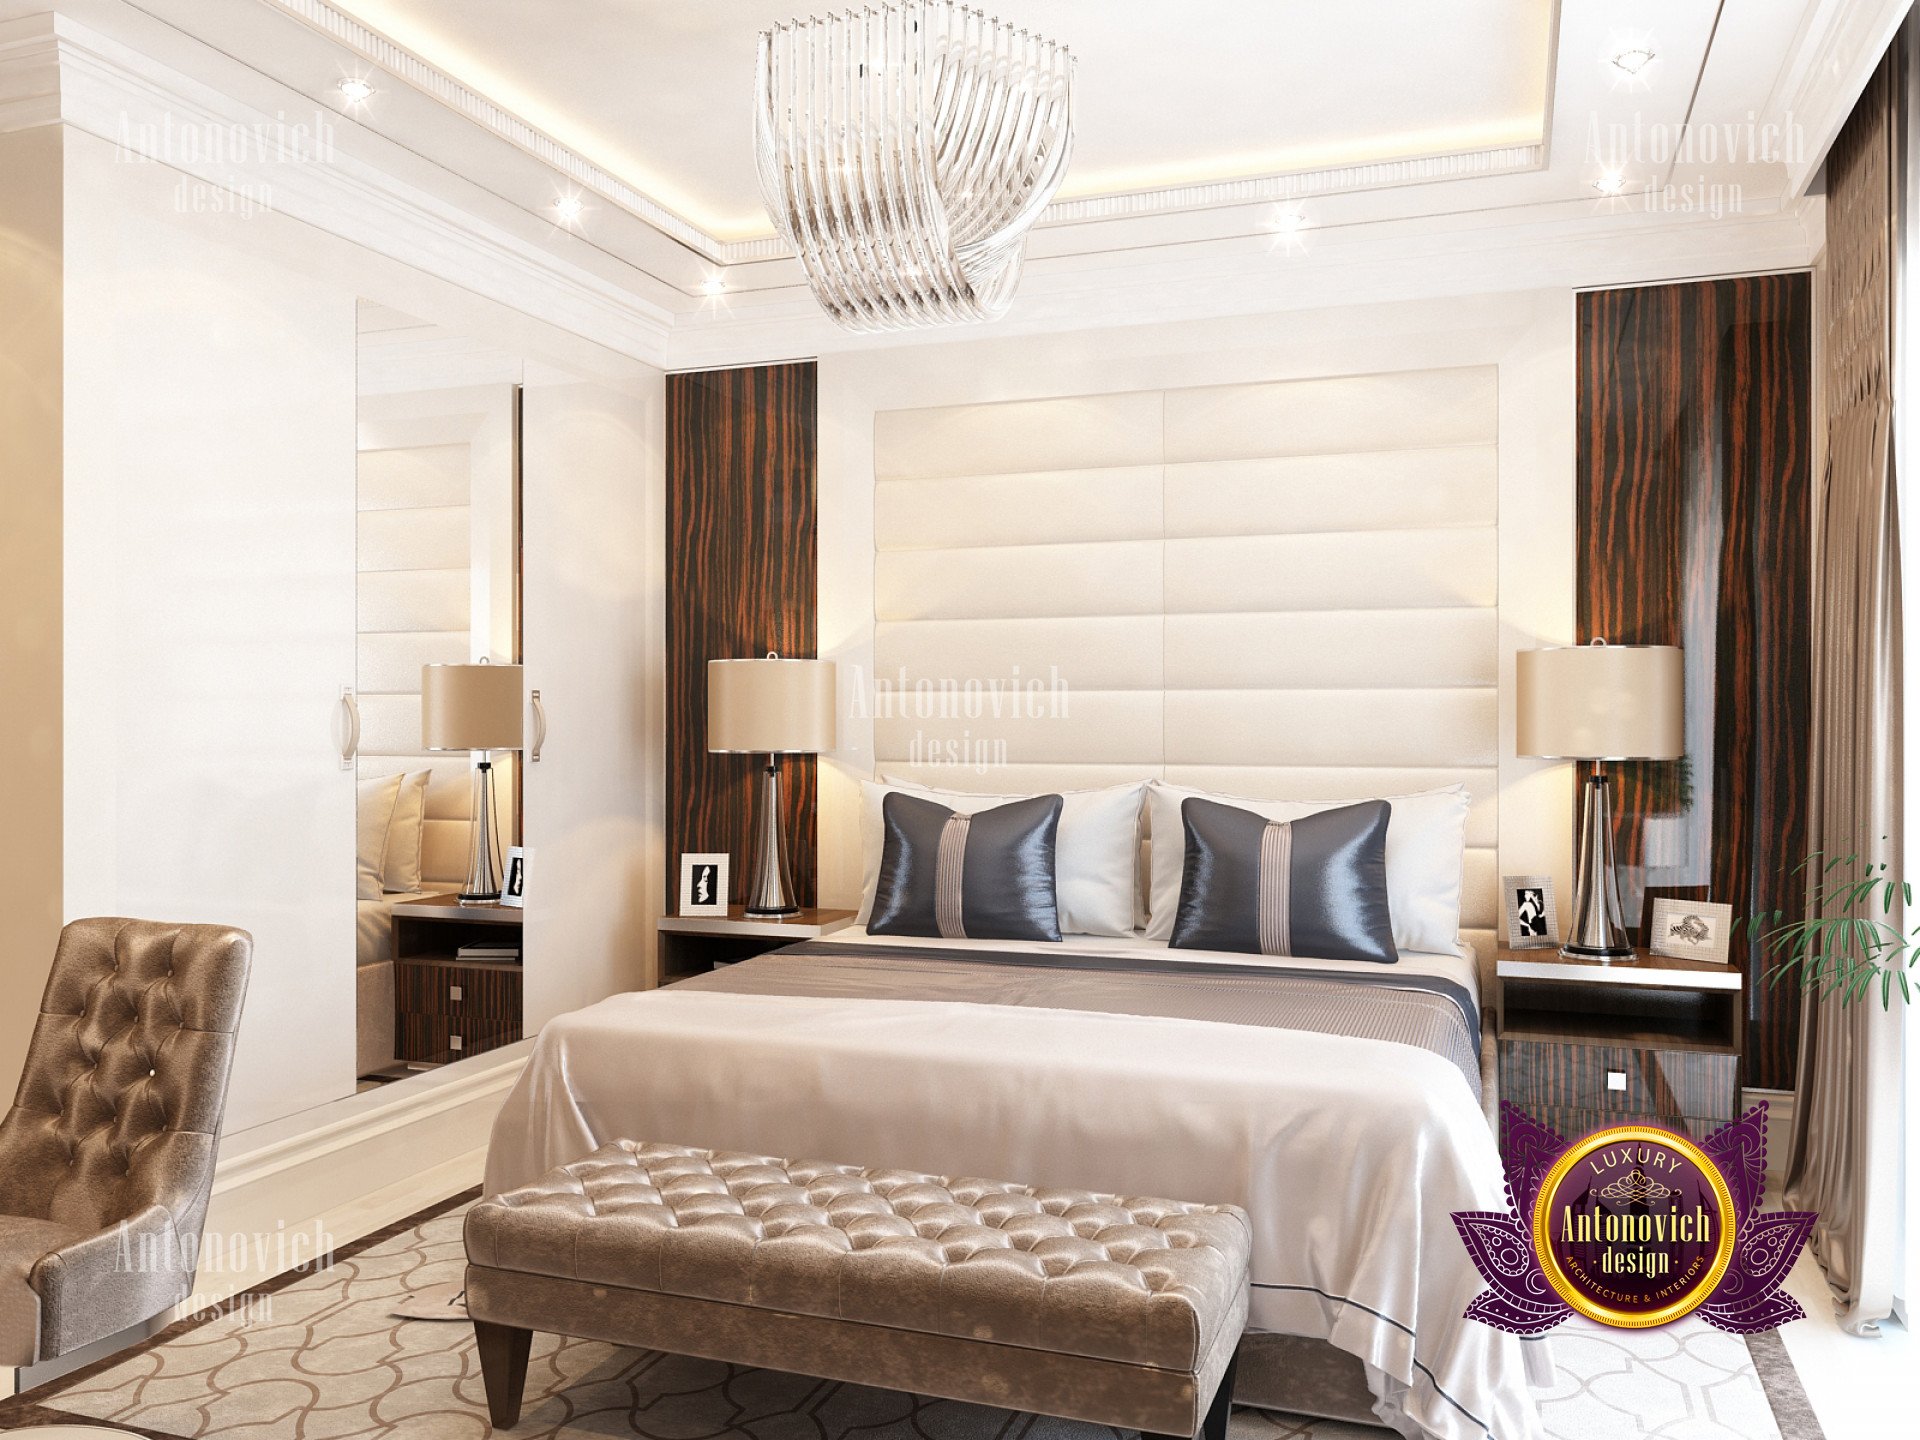 Best luxury bedroom interior - luxury interior design